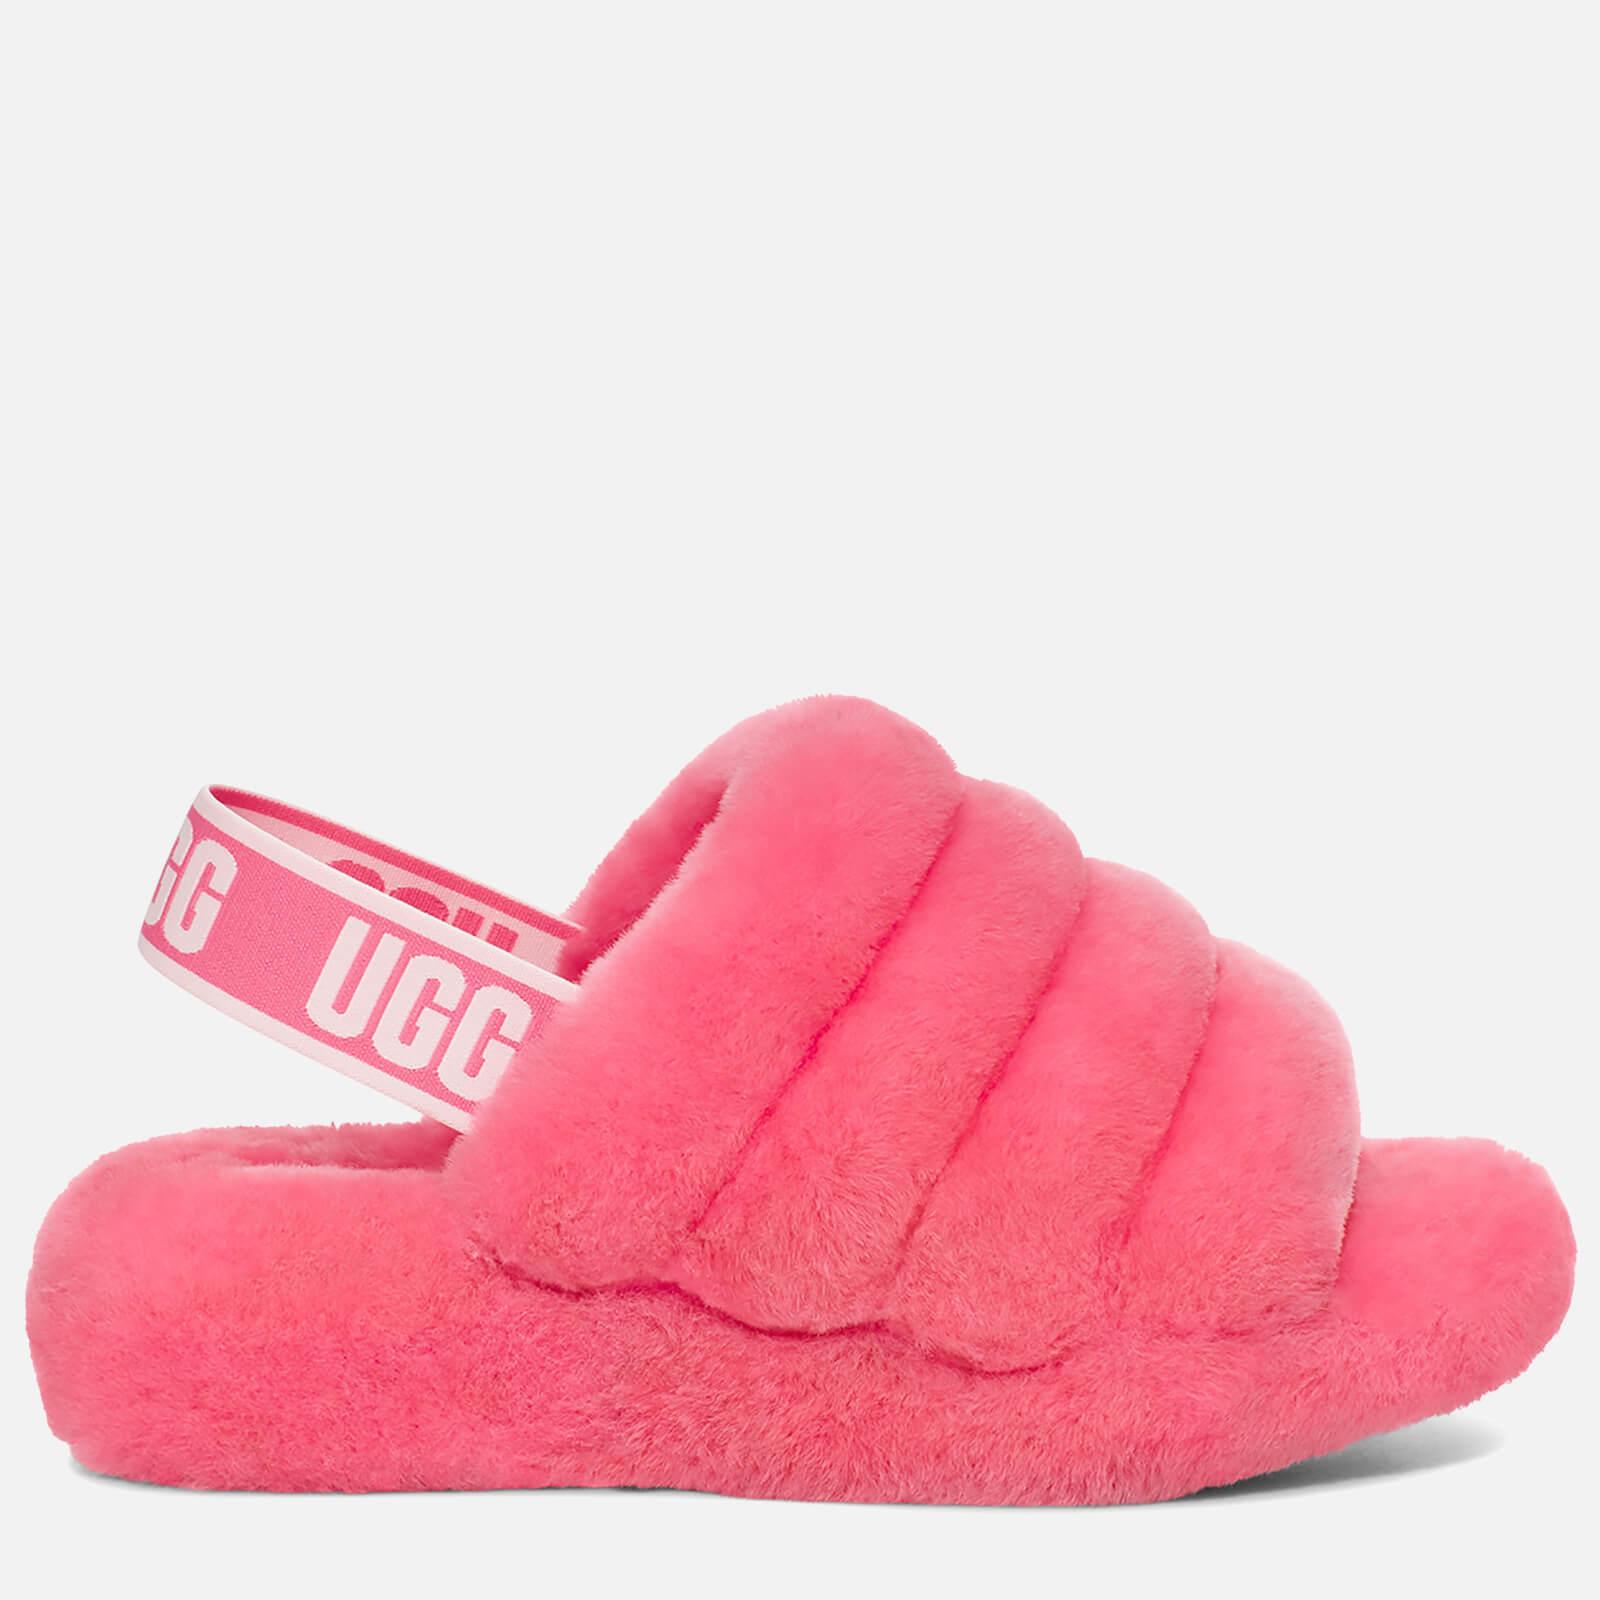 UGG Fluff Yeah Slide Sheepskin Slippers in Pink - Lyst